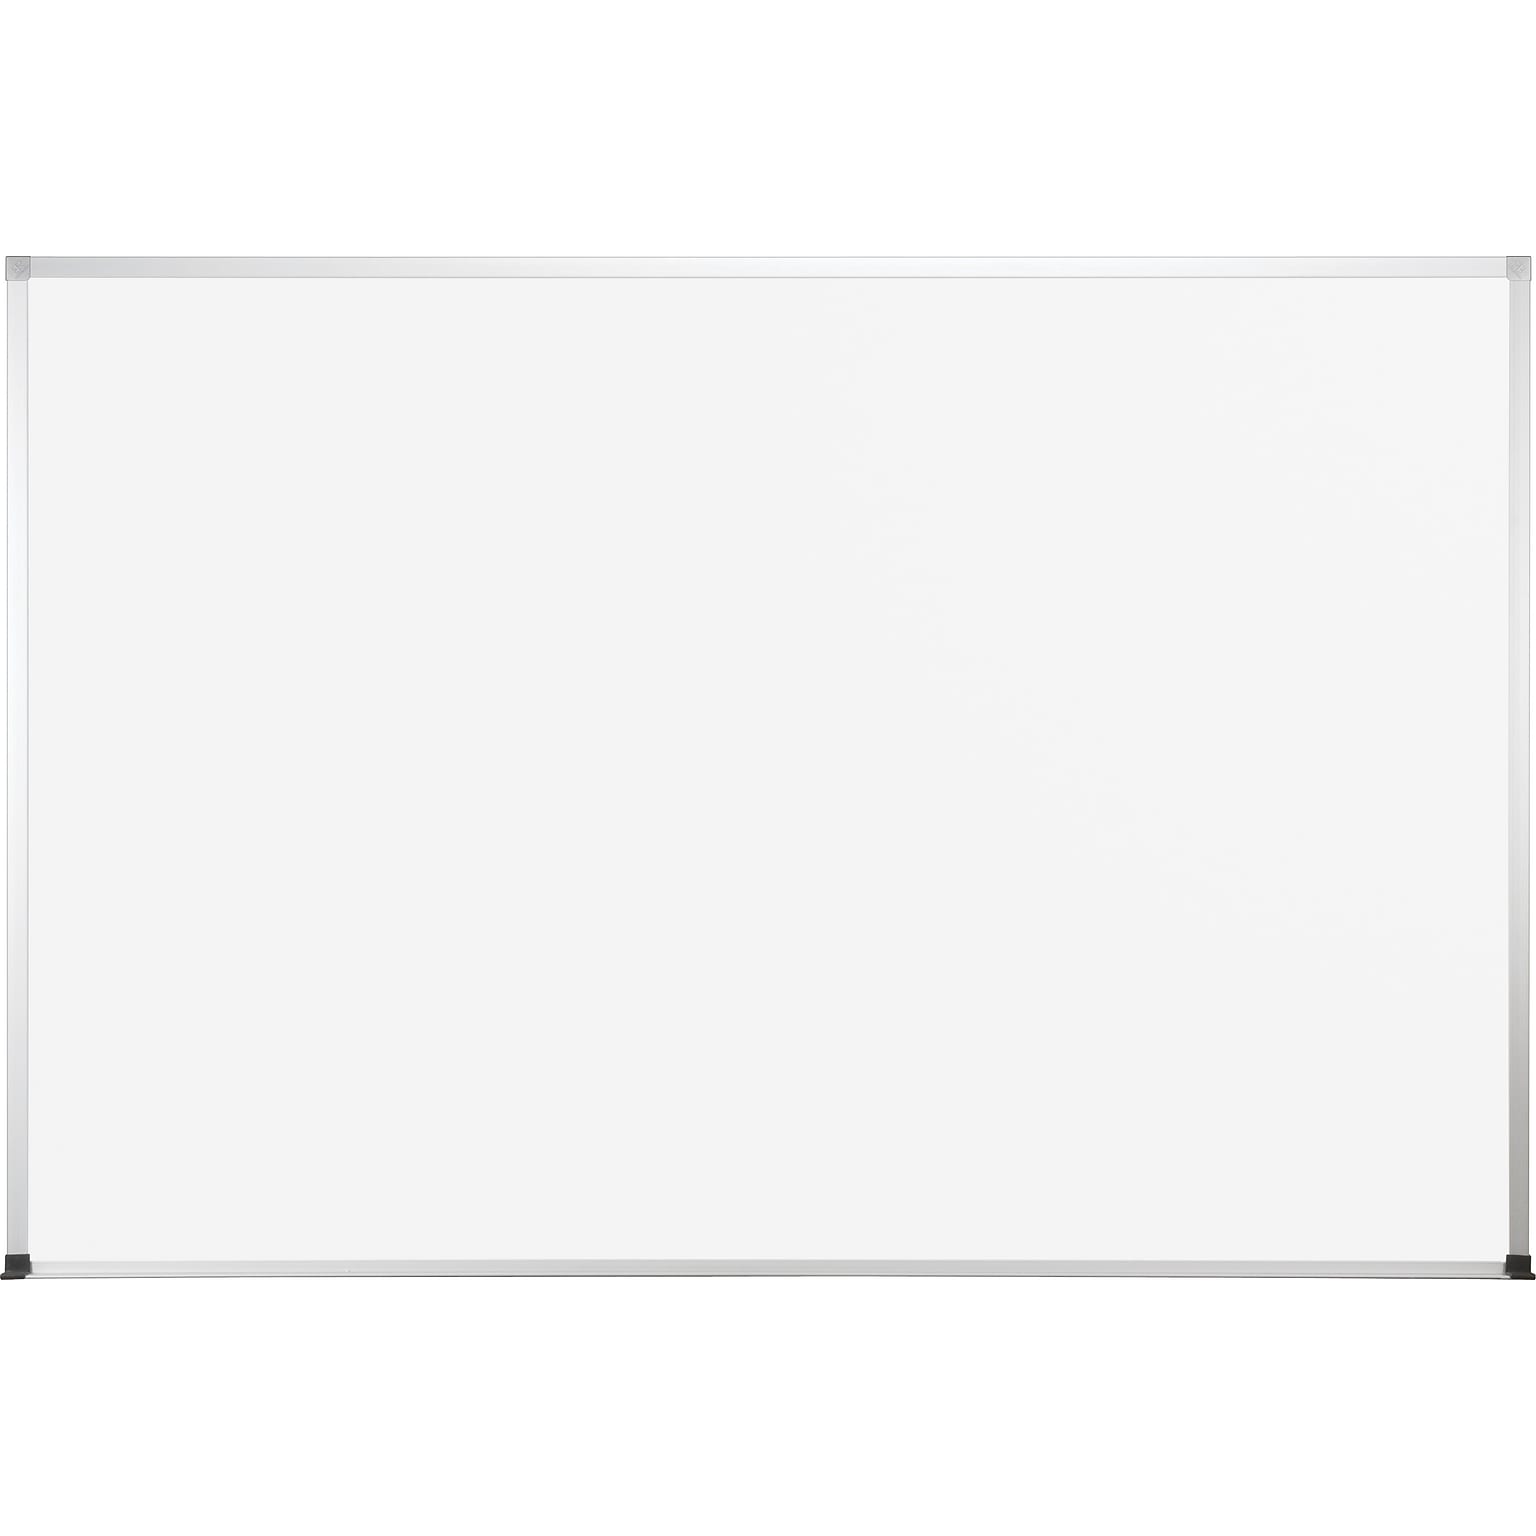 Best-Rite® Dura-Rite Dry-Erase Board with Aluminum Frame, 2x3